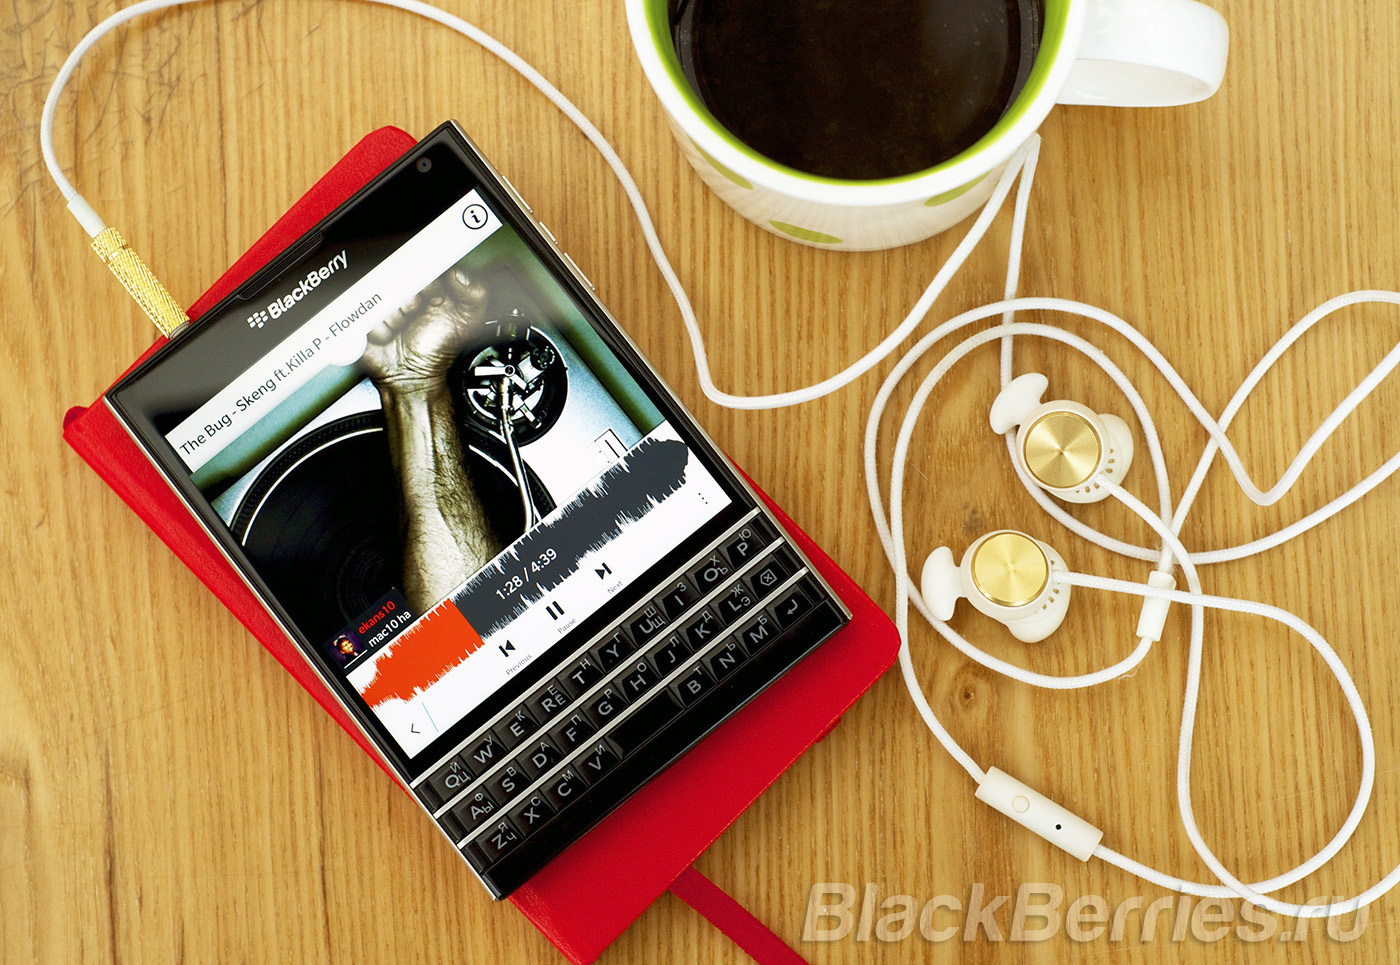 BlackBerry-Passport-Music-Apps-02